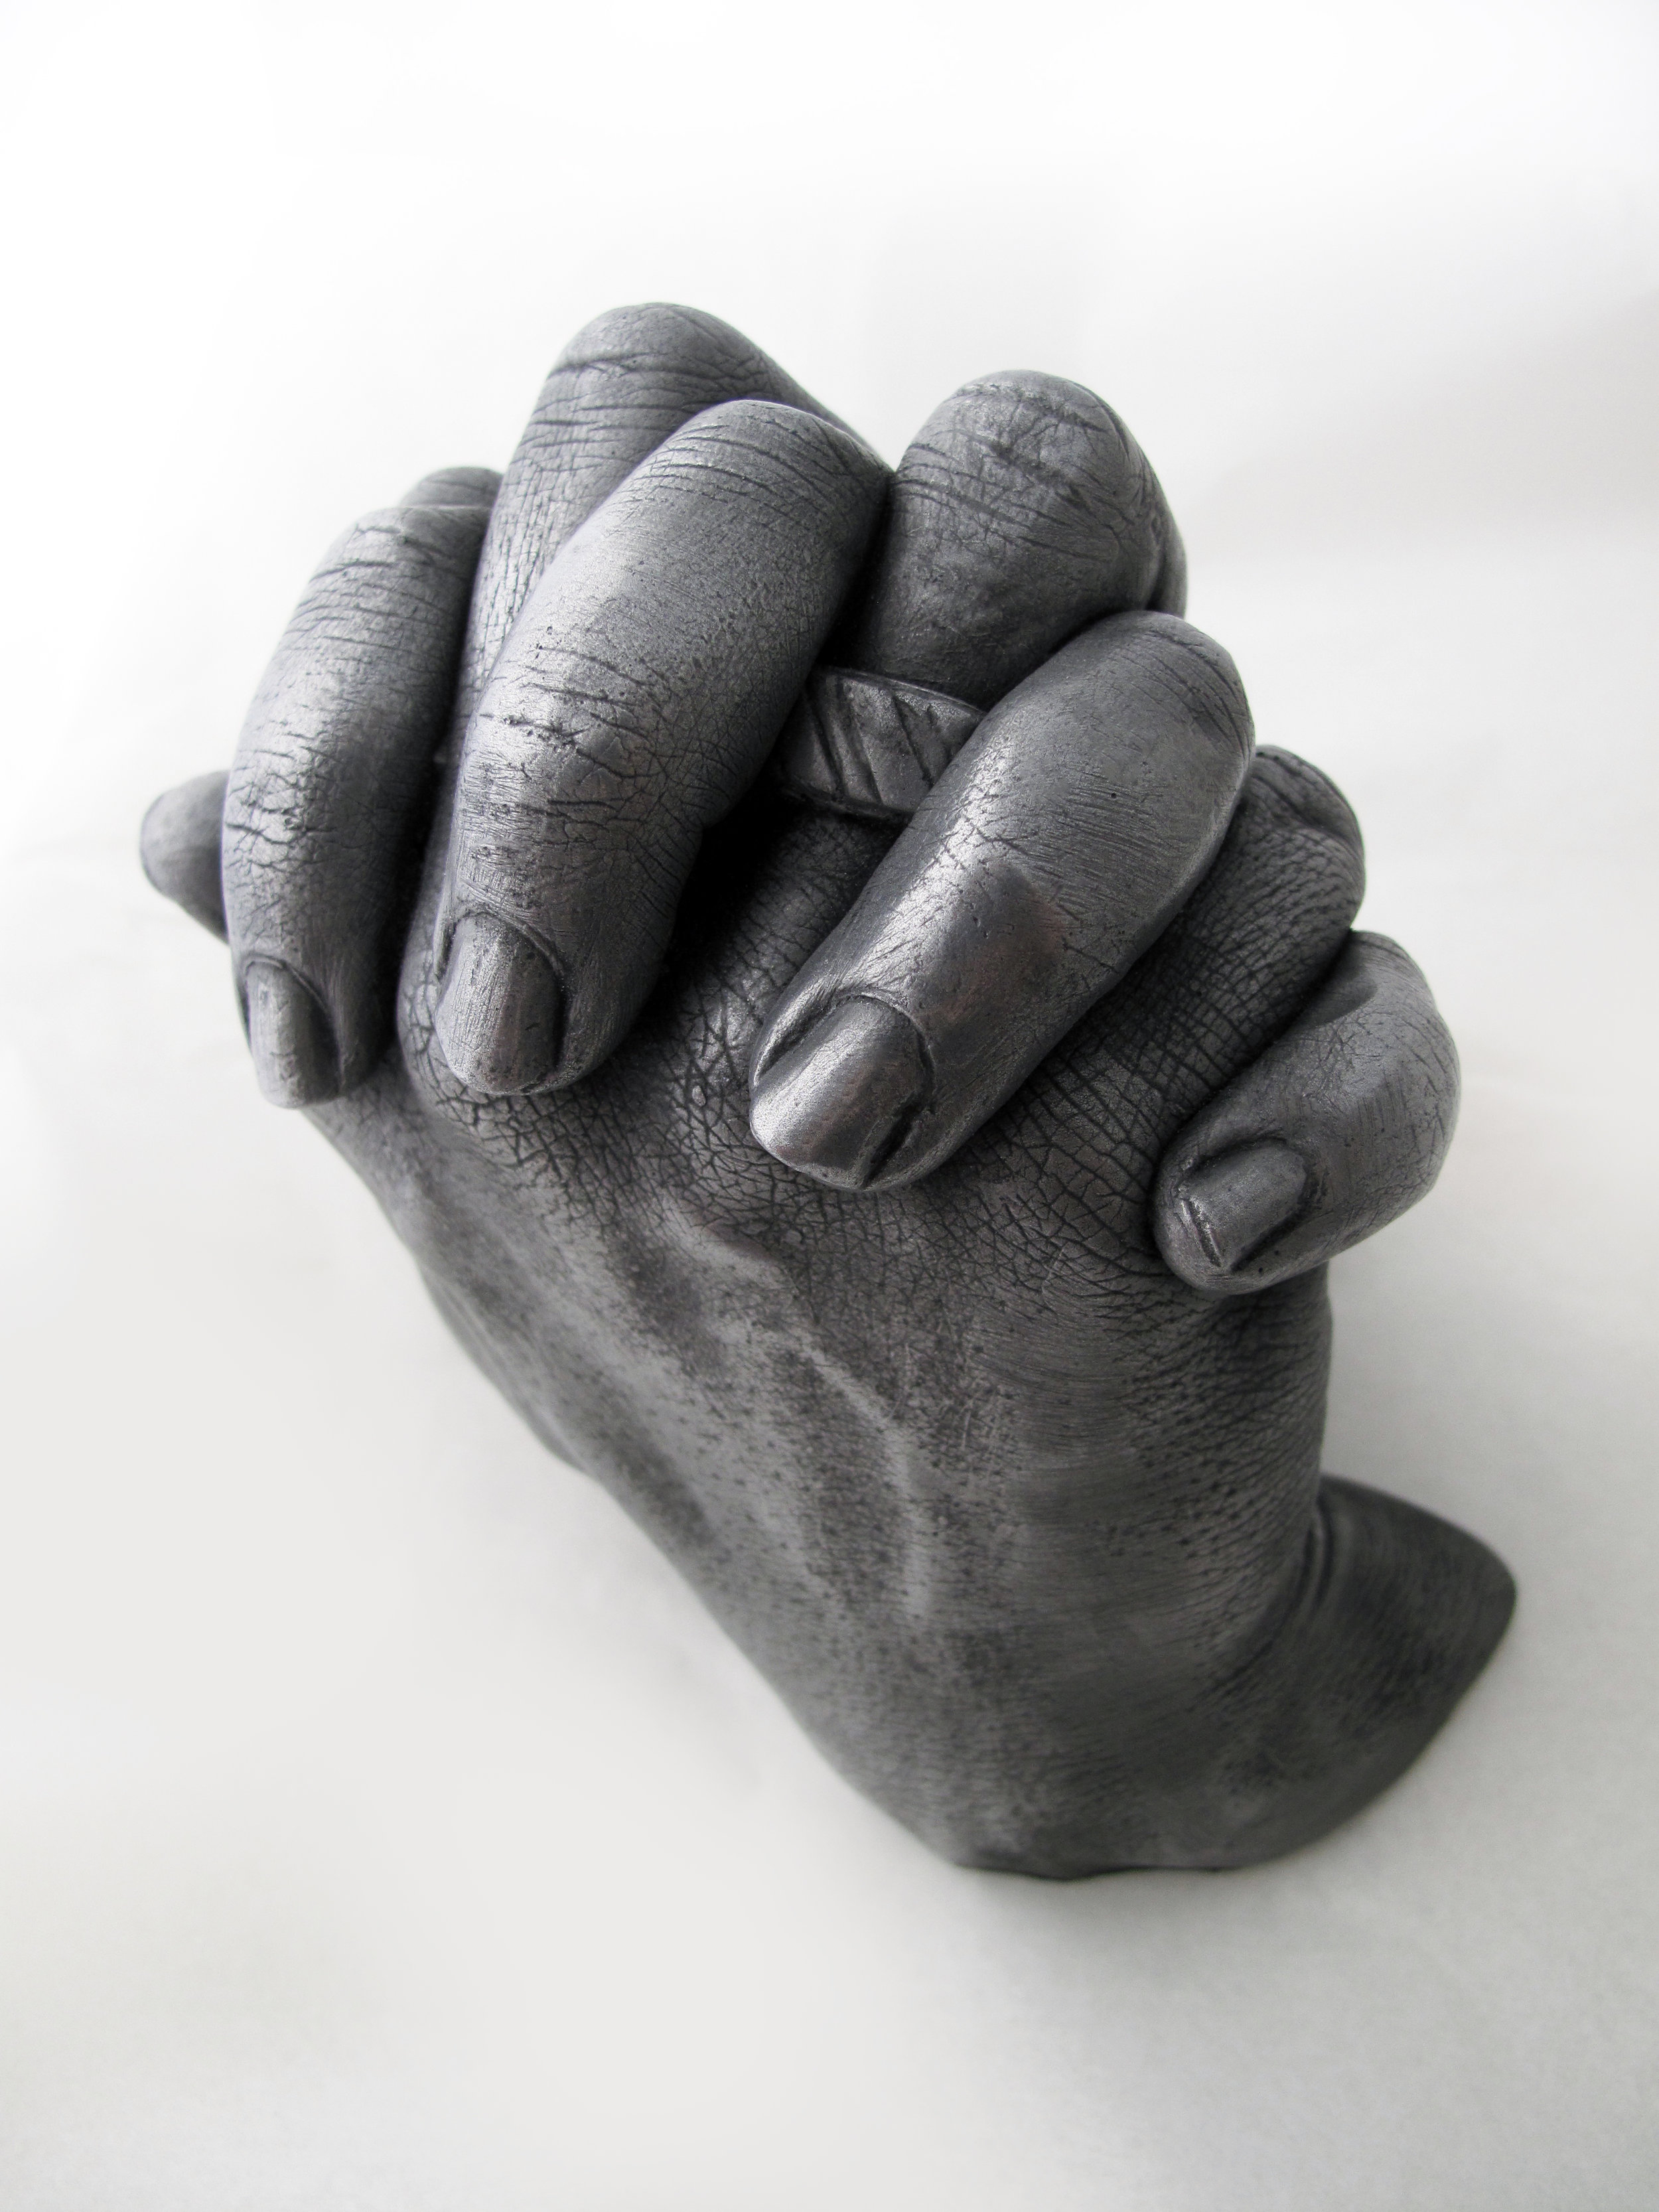 aluminium hand cast.jpg